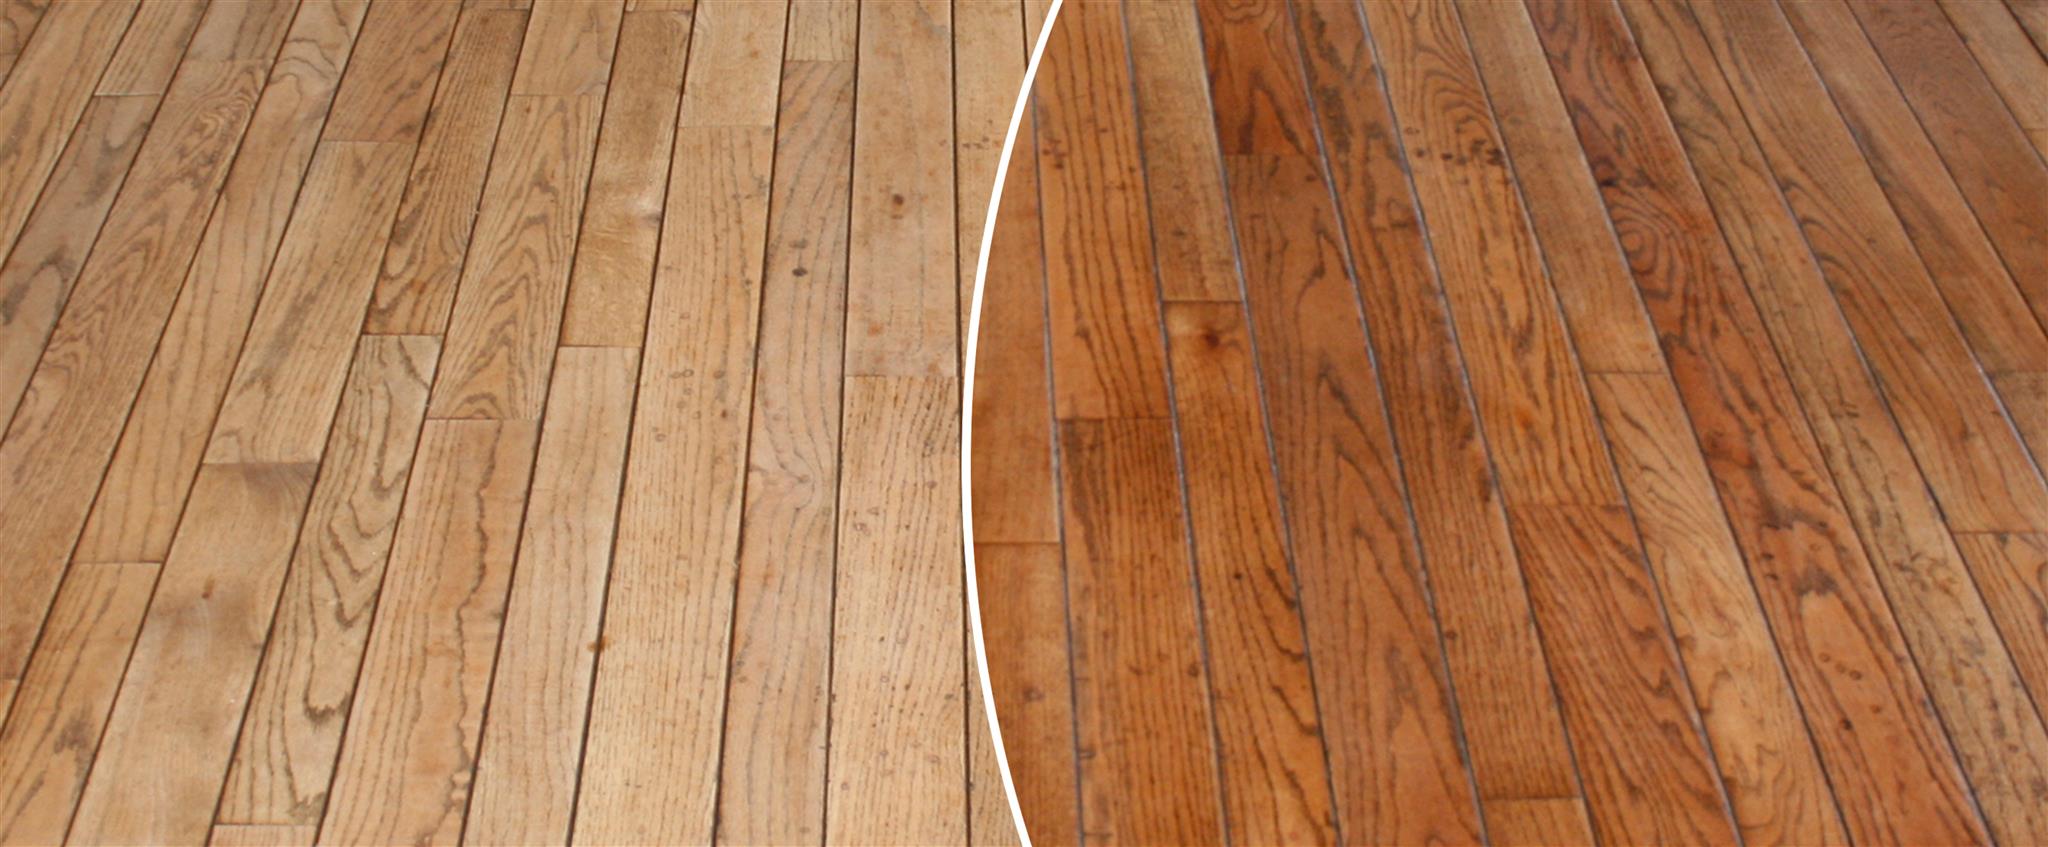 Wood Floor Refinishing Services N Hance, Best Hardwood Floor Refinishing